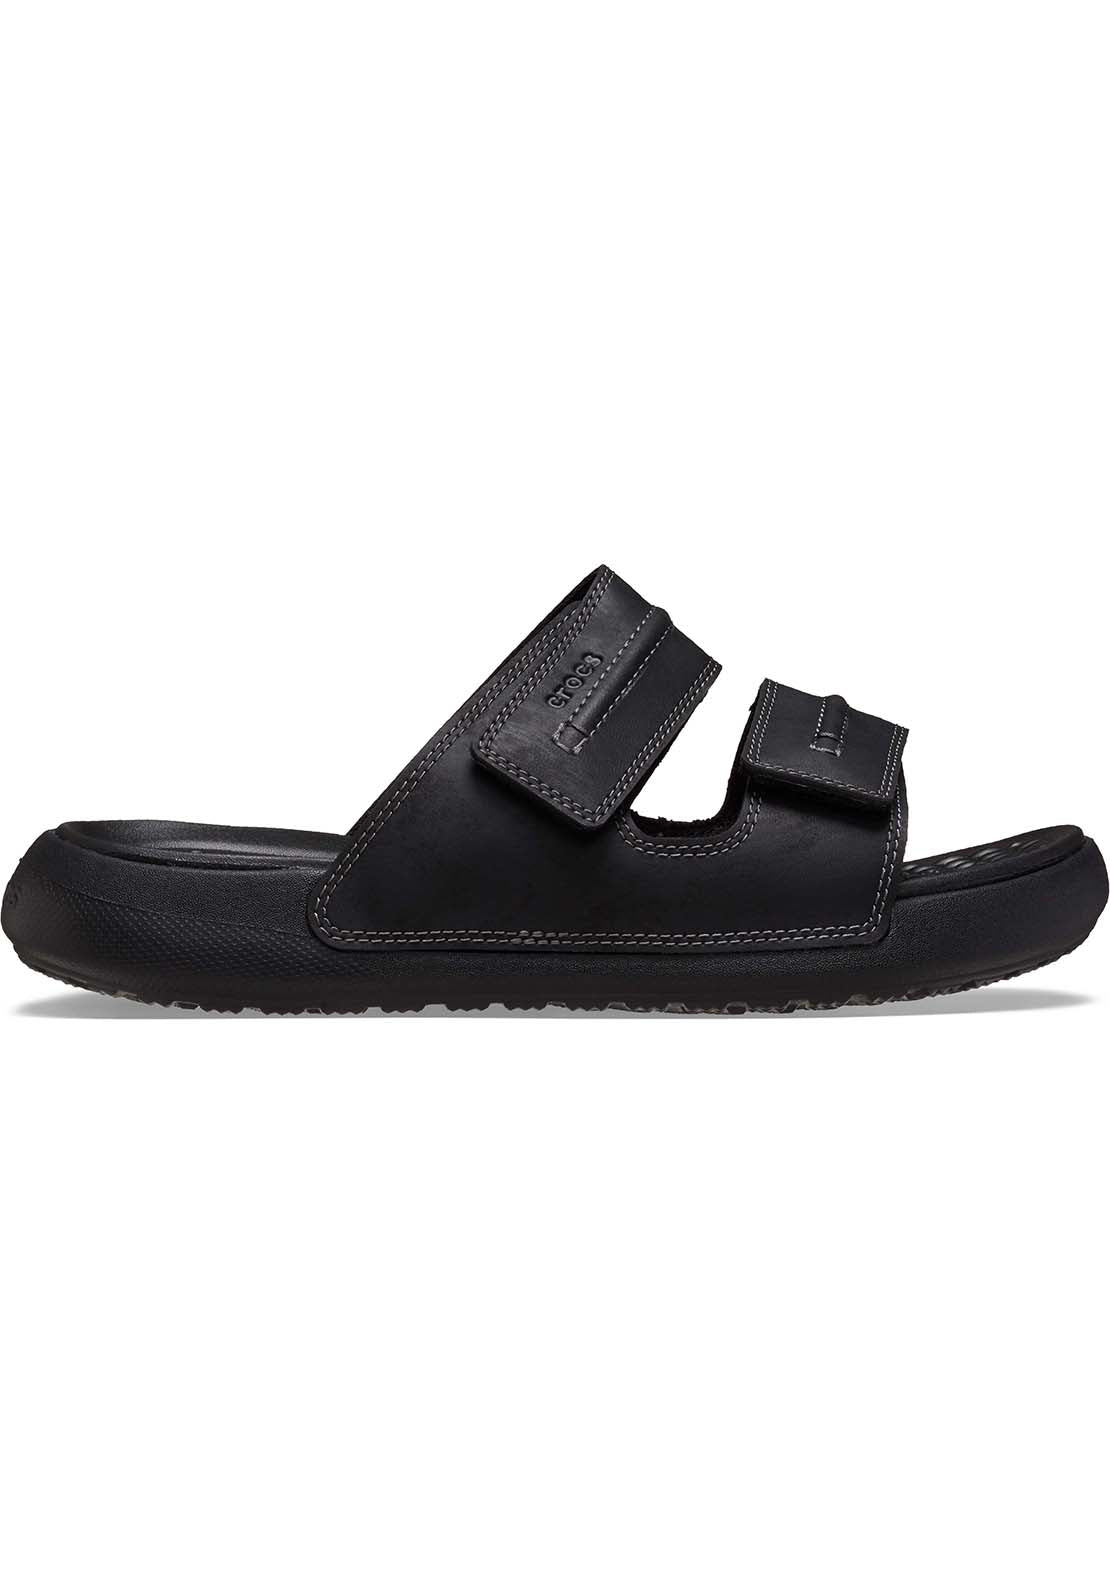 Crocs Yukon Vista II Sandal - Black 4 Shaws Department Stores